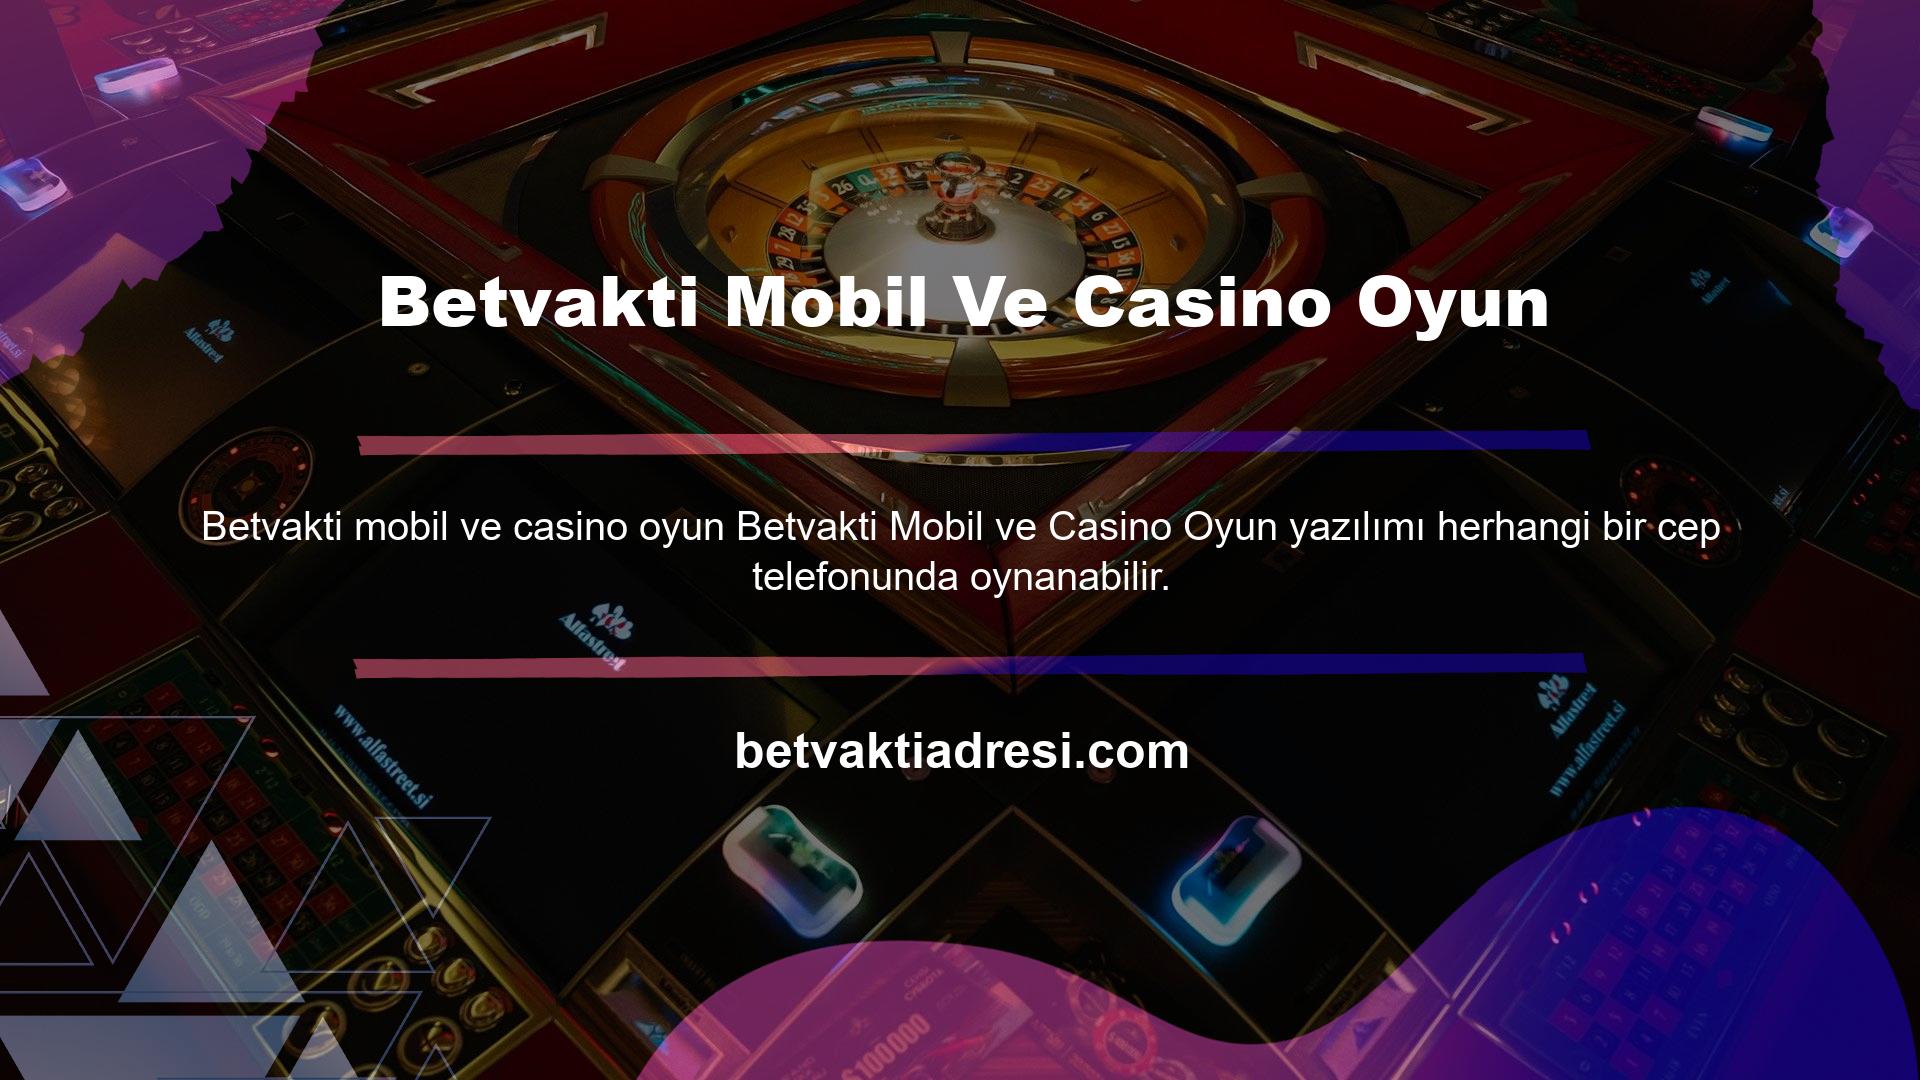 Betvakti Mobil Ve Casino Oyun